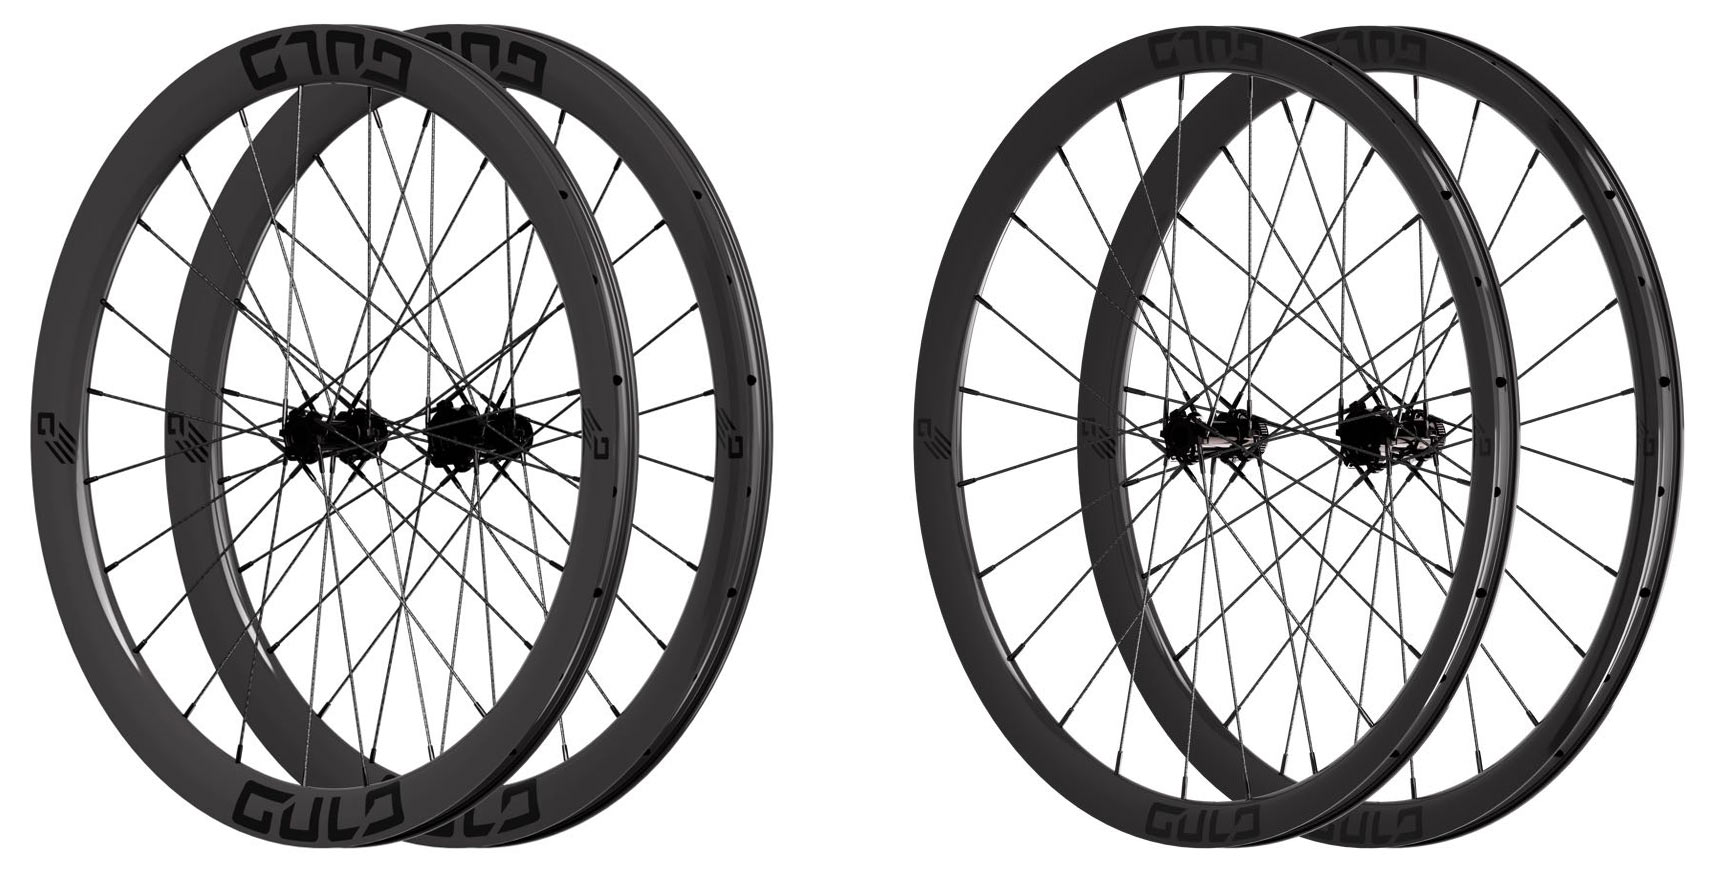 gulo road bike wheels with braided carbon fiber spokes